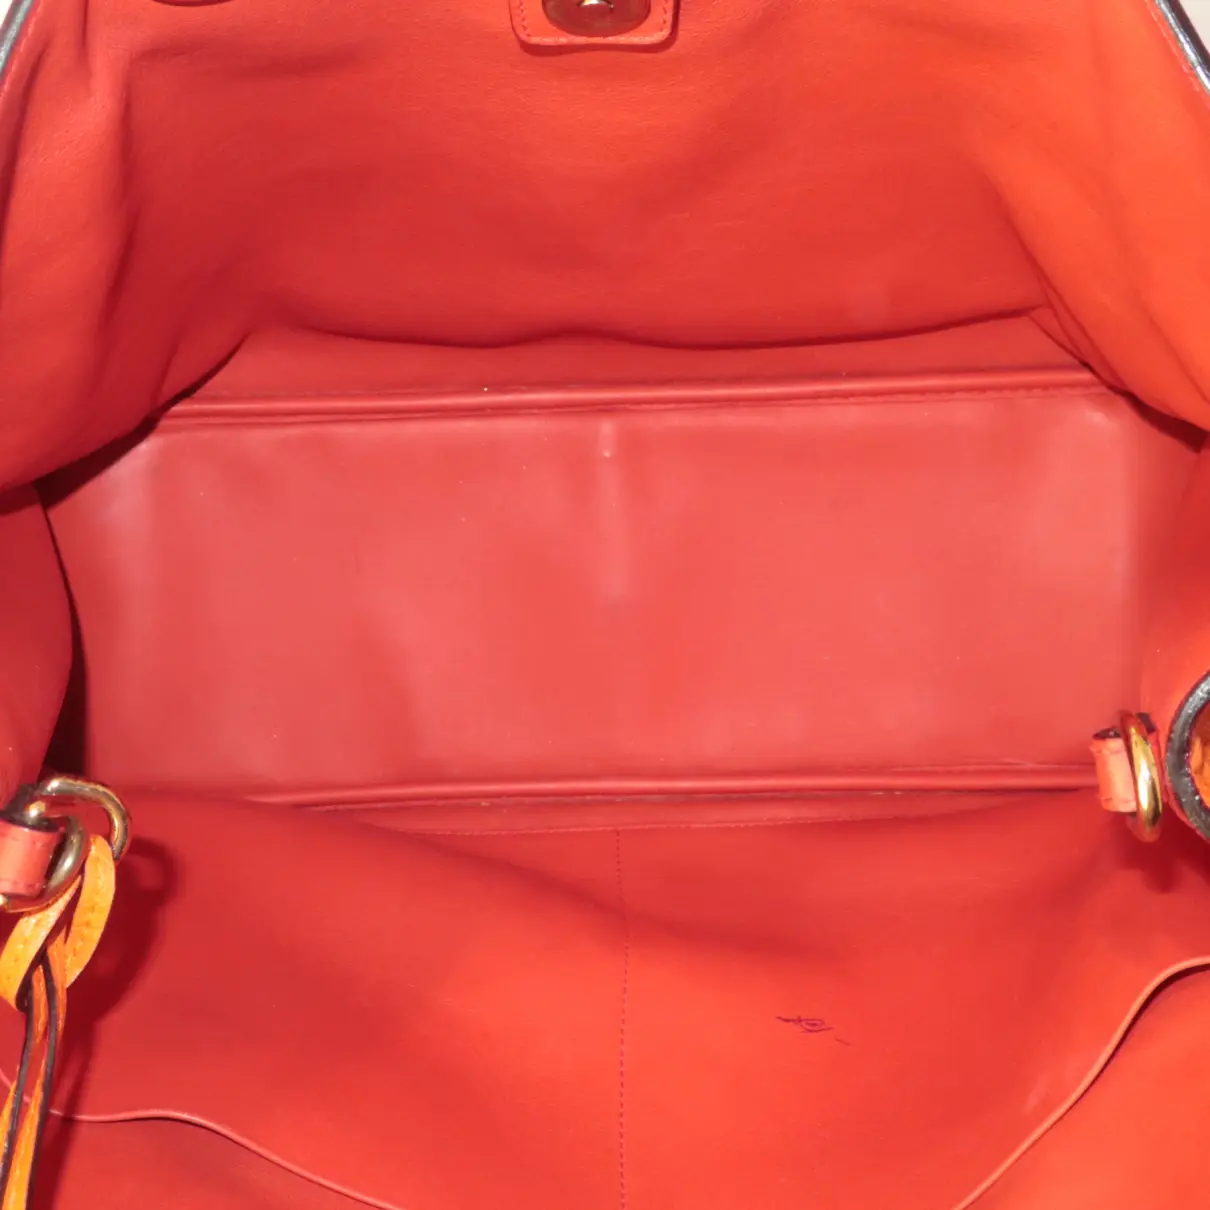 Ostrich handbag Dior